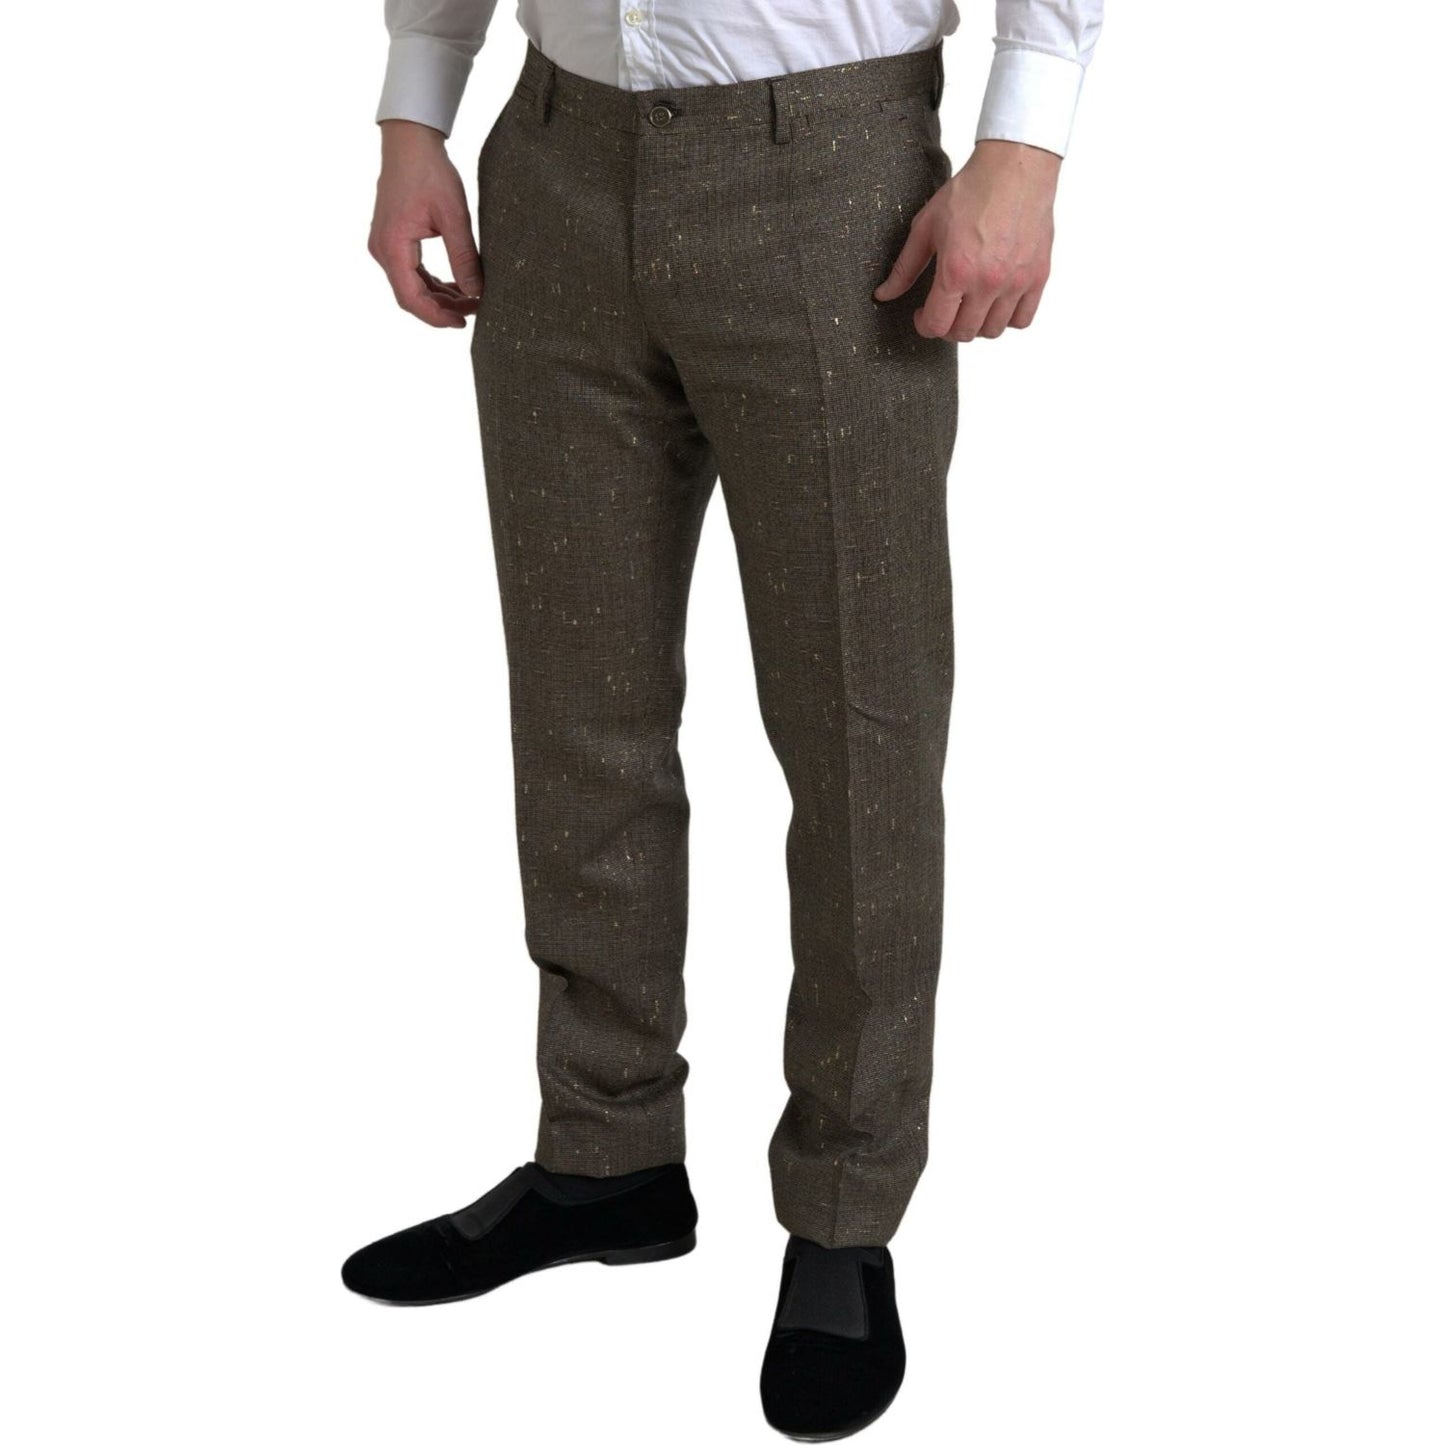 Dolce & Gabbana Elegant Skinny Wool Chino Pants brown-wool-dress-skinny-men-trouser-pants 465A9113bg-scaled-a172dbbc-c35.jpg